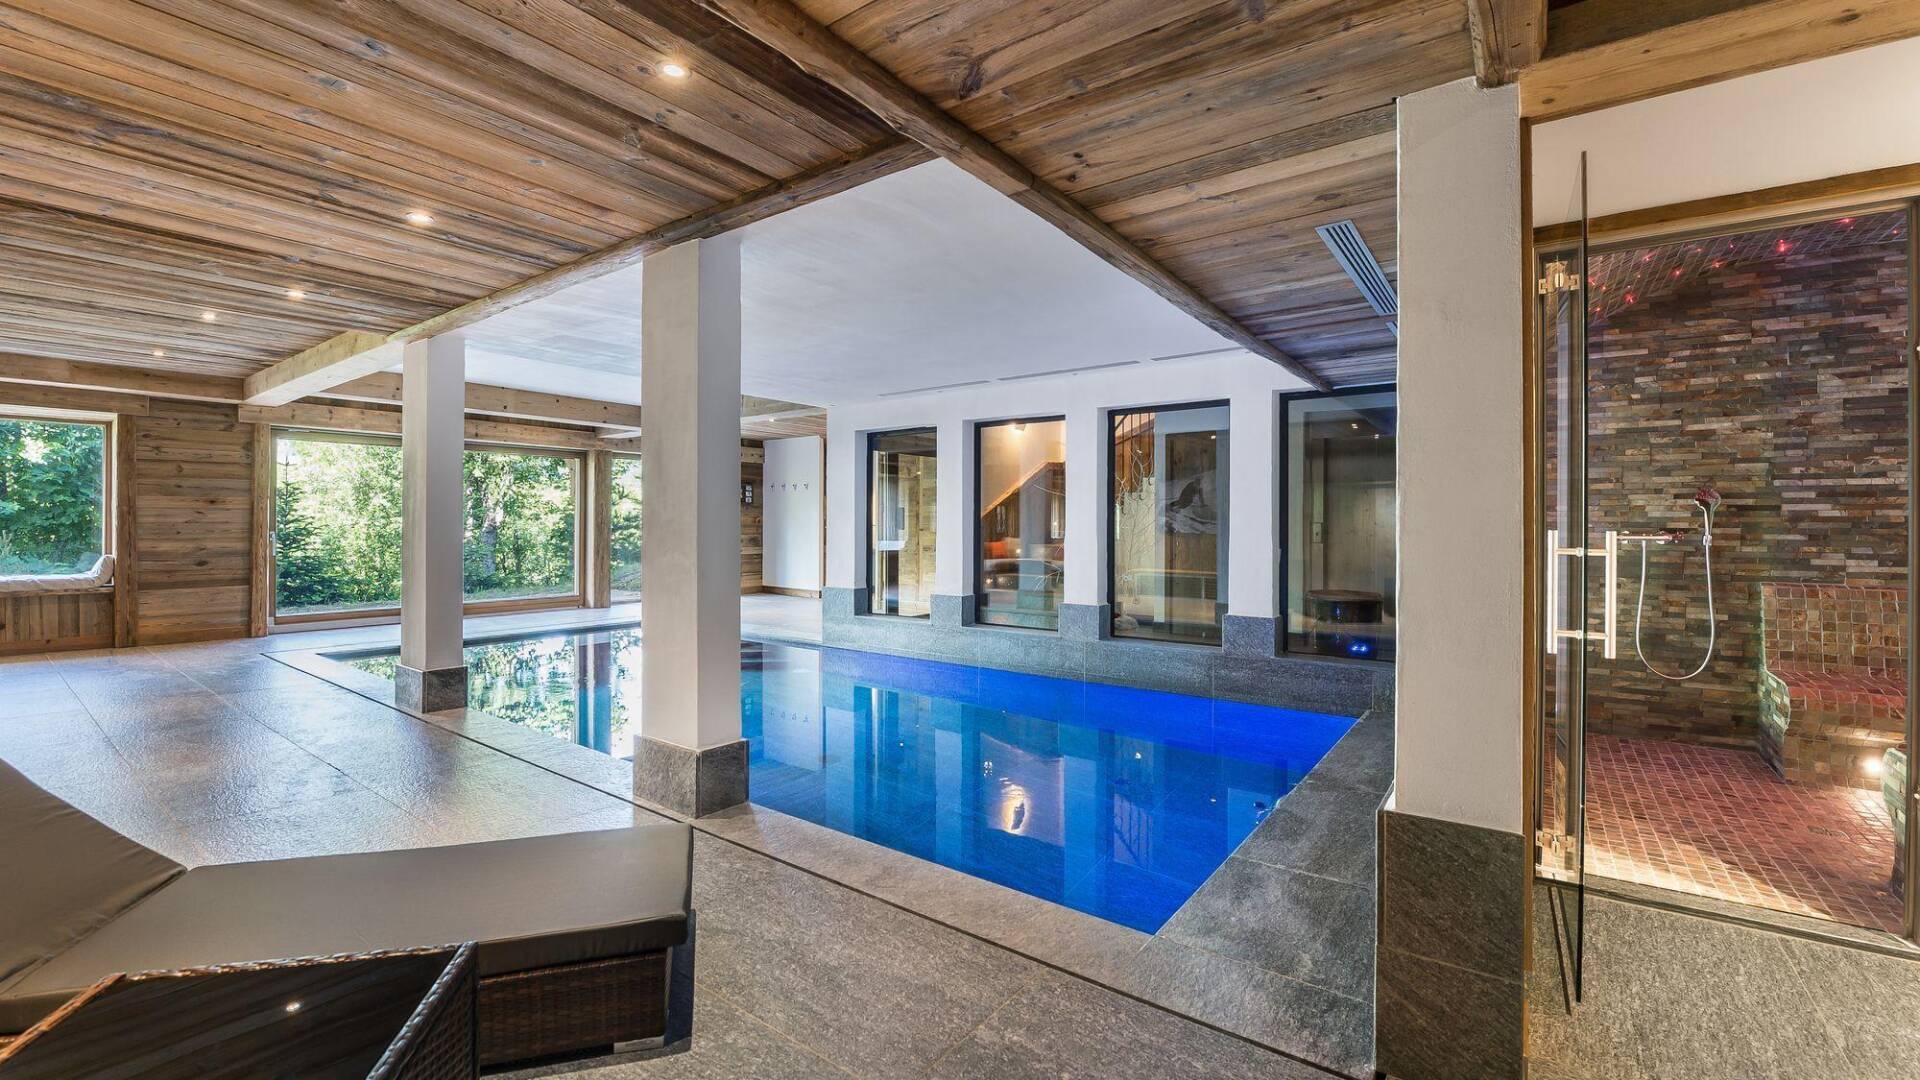 exclusive wellness area with indoor pool